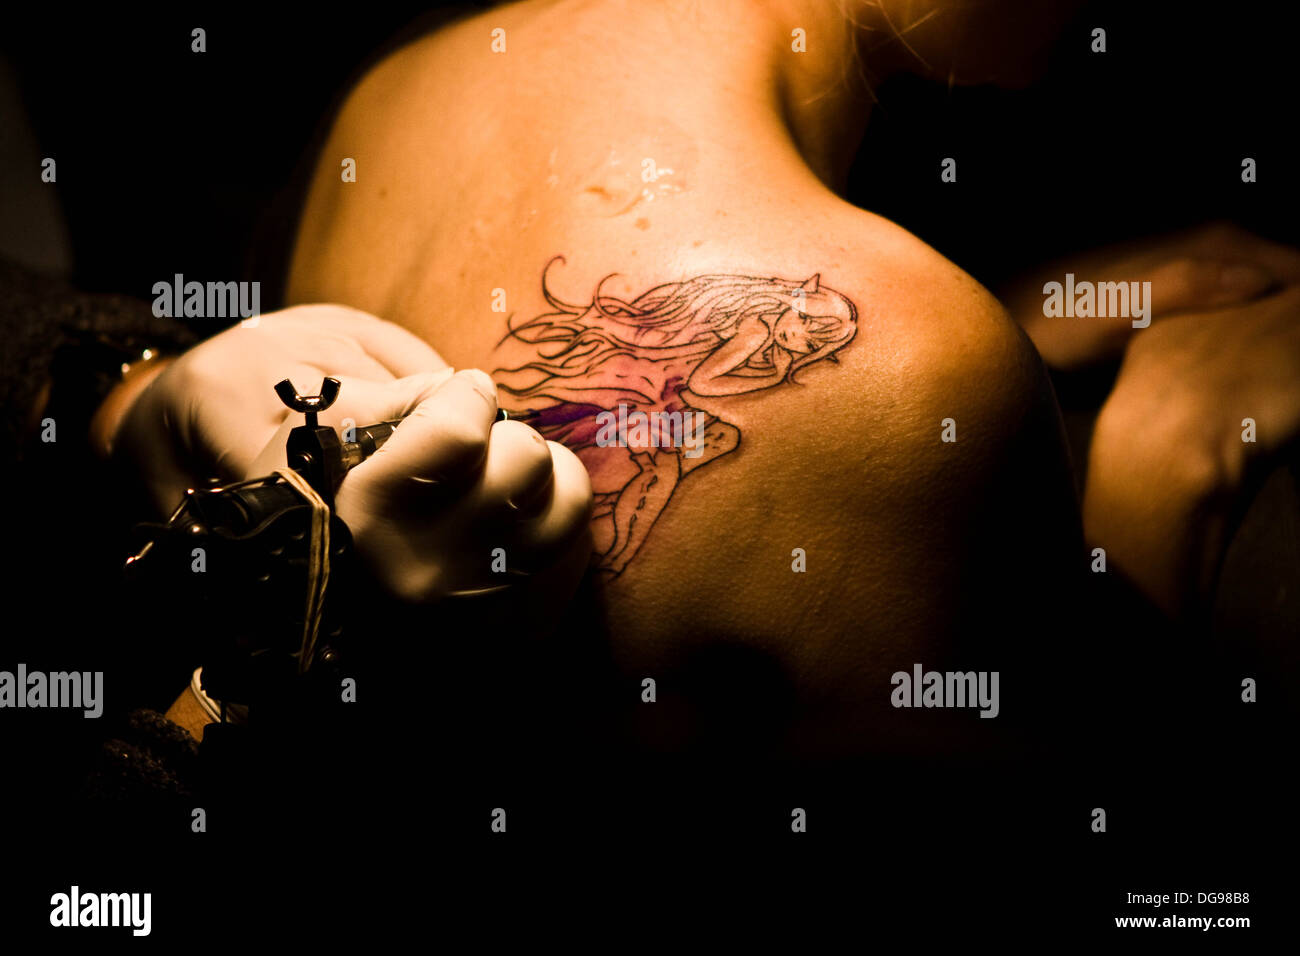 girl getting a tattoo Stock Photo